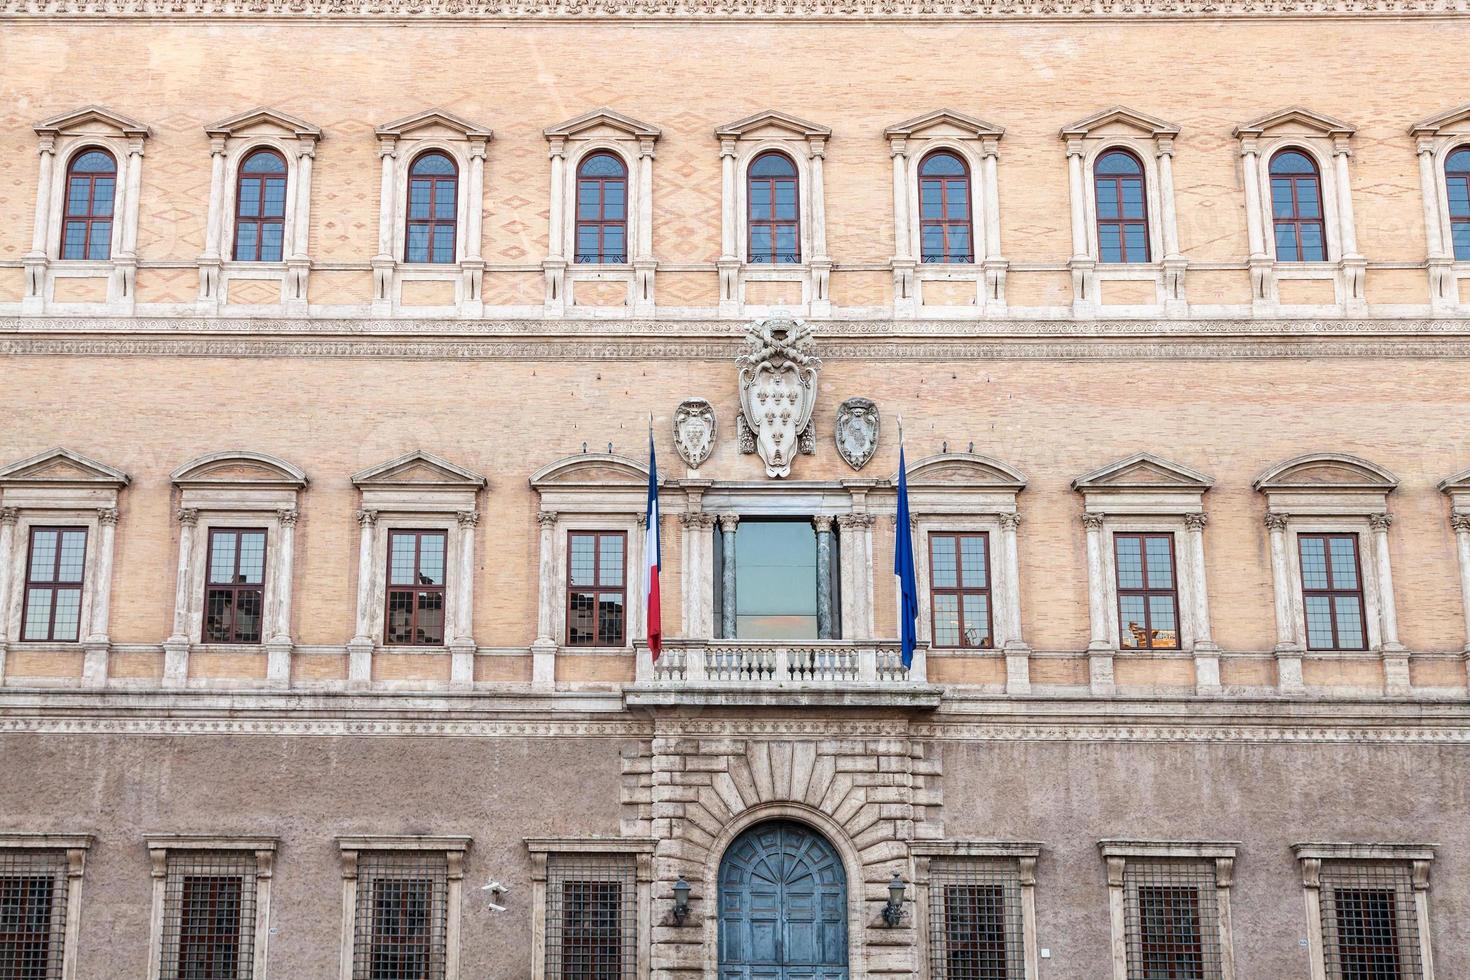 Fasad av palazzo farnese i rom foto